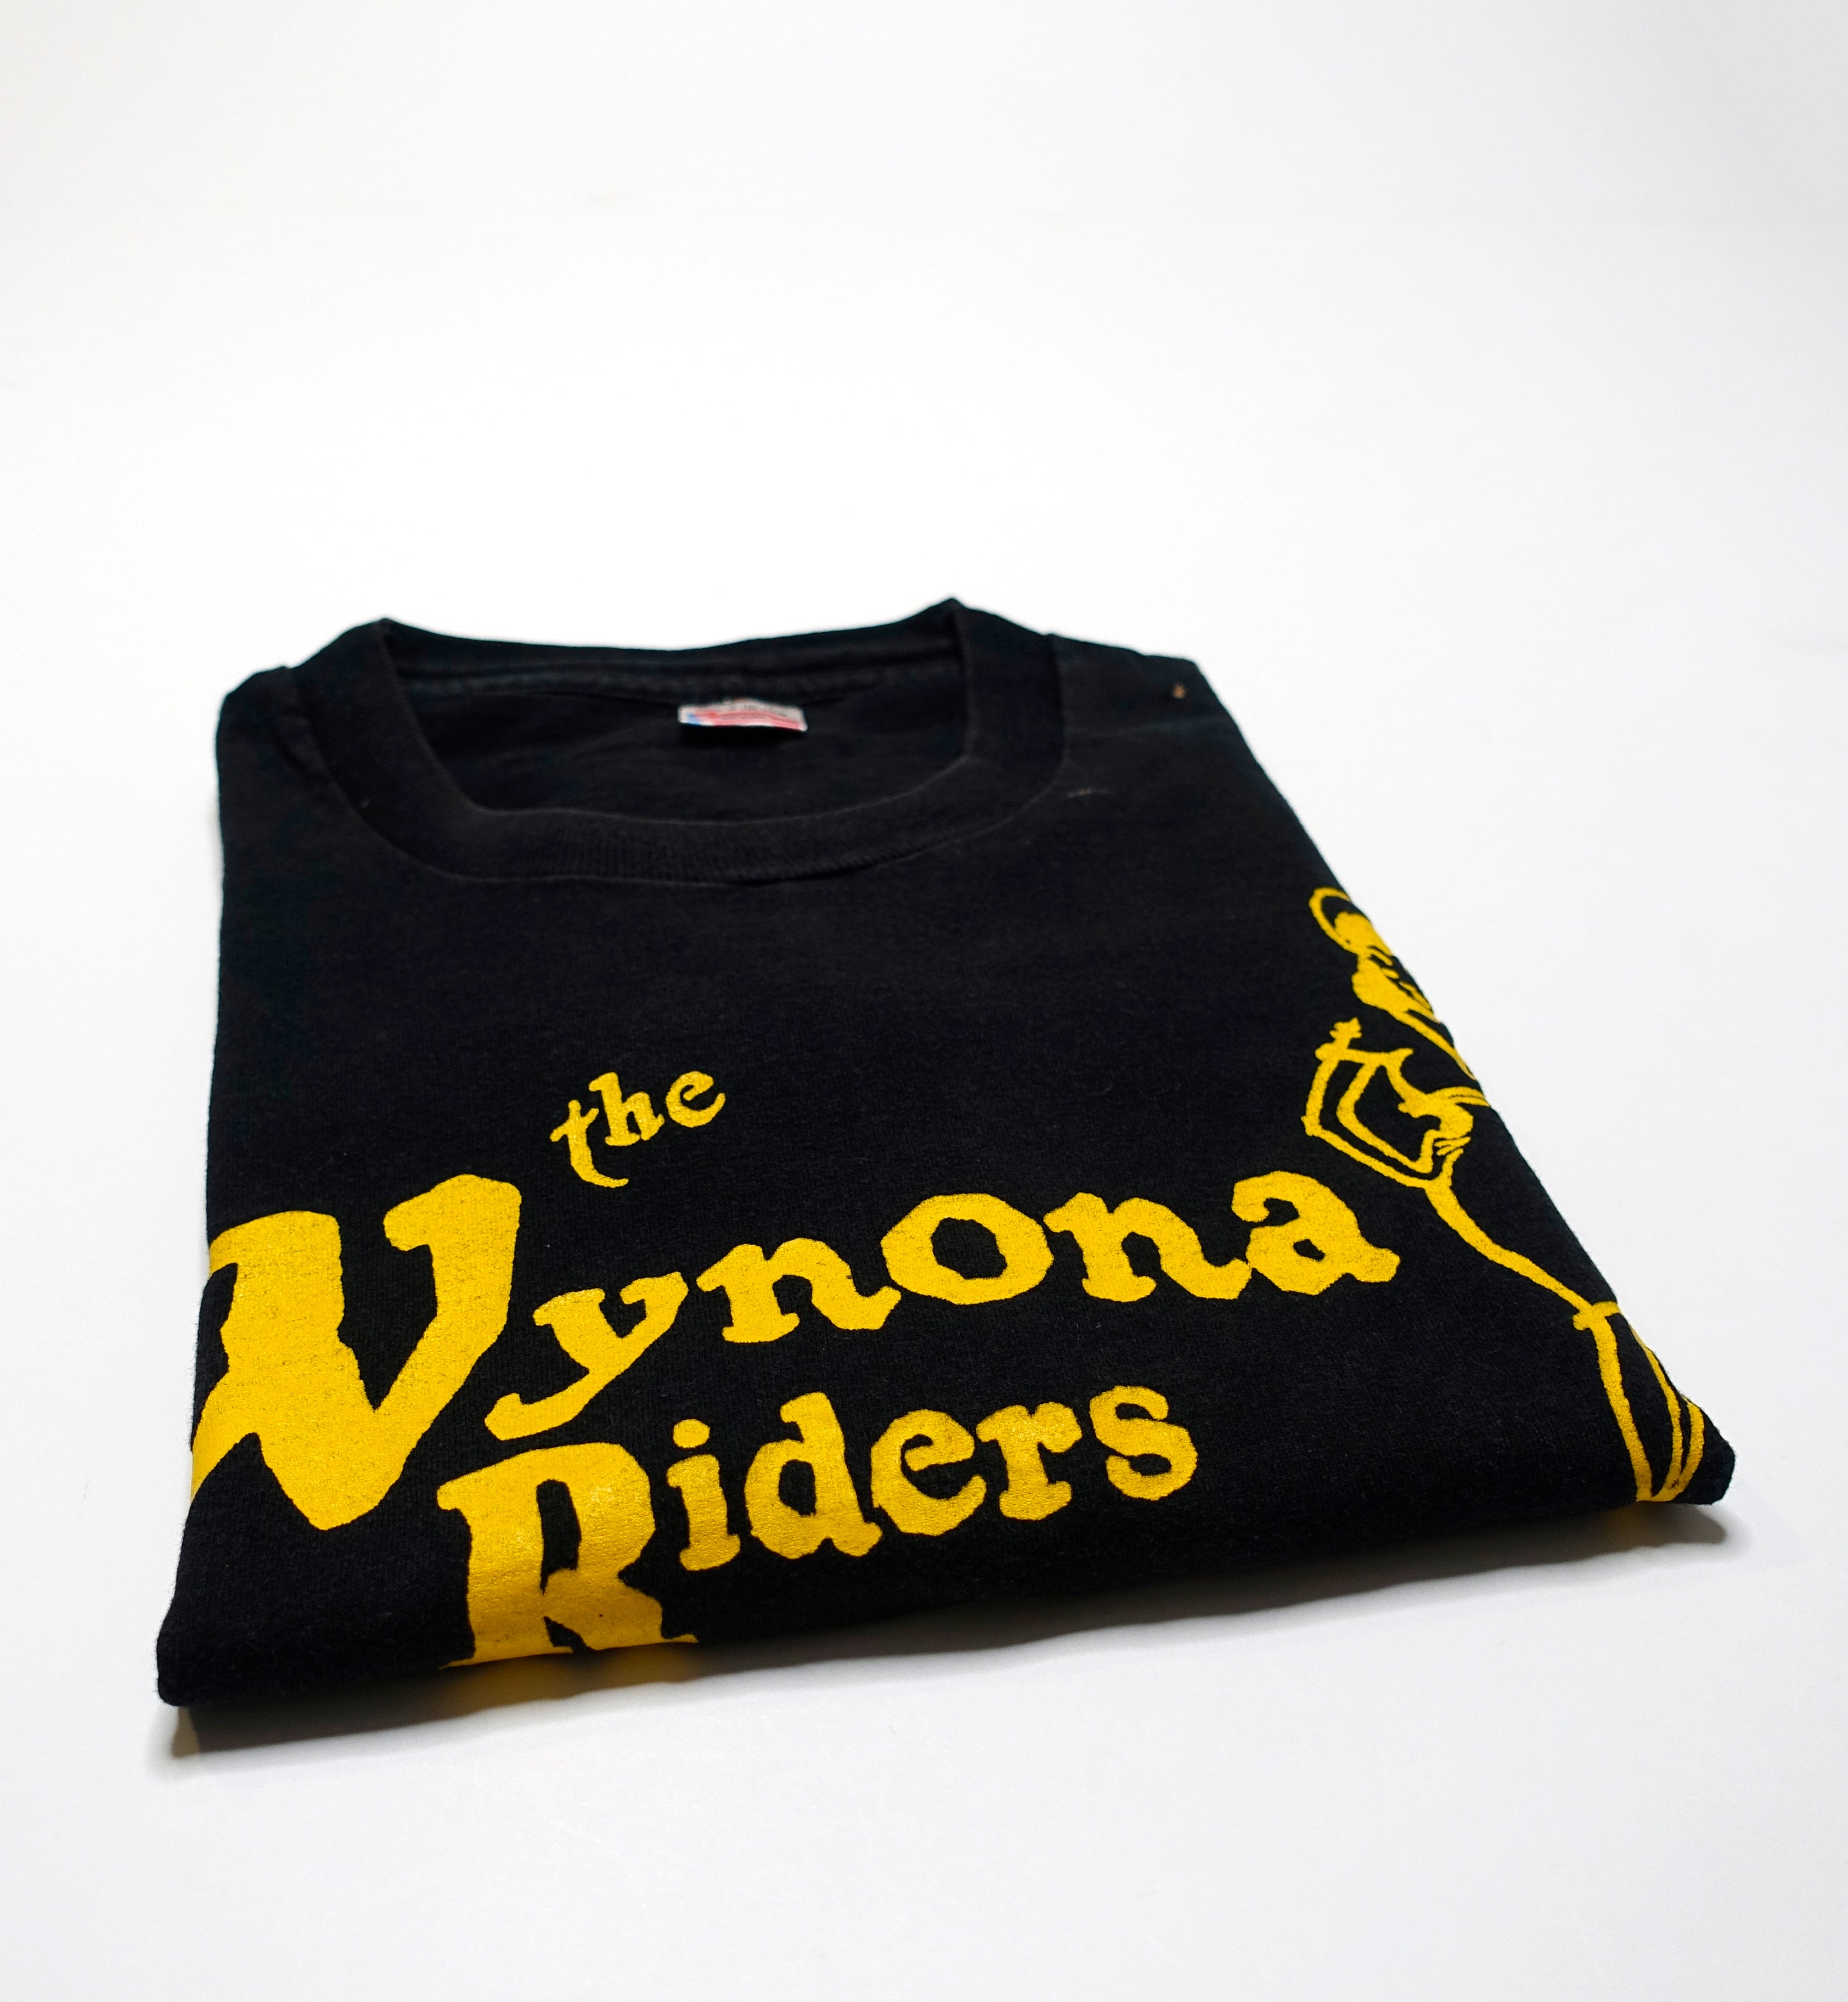 the Wynona Ryders –  J.D. Salinger 1995 Tour Shirt Size XL